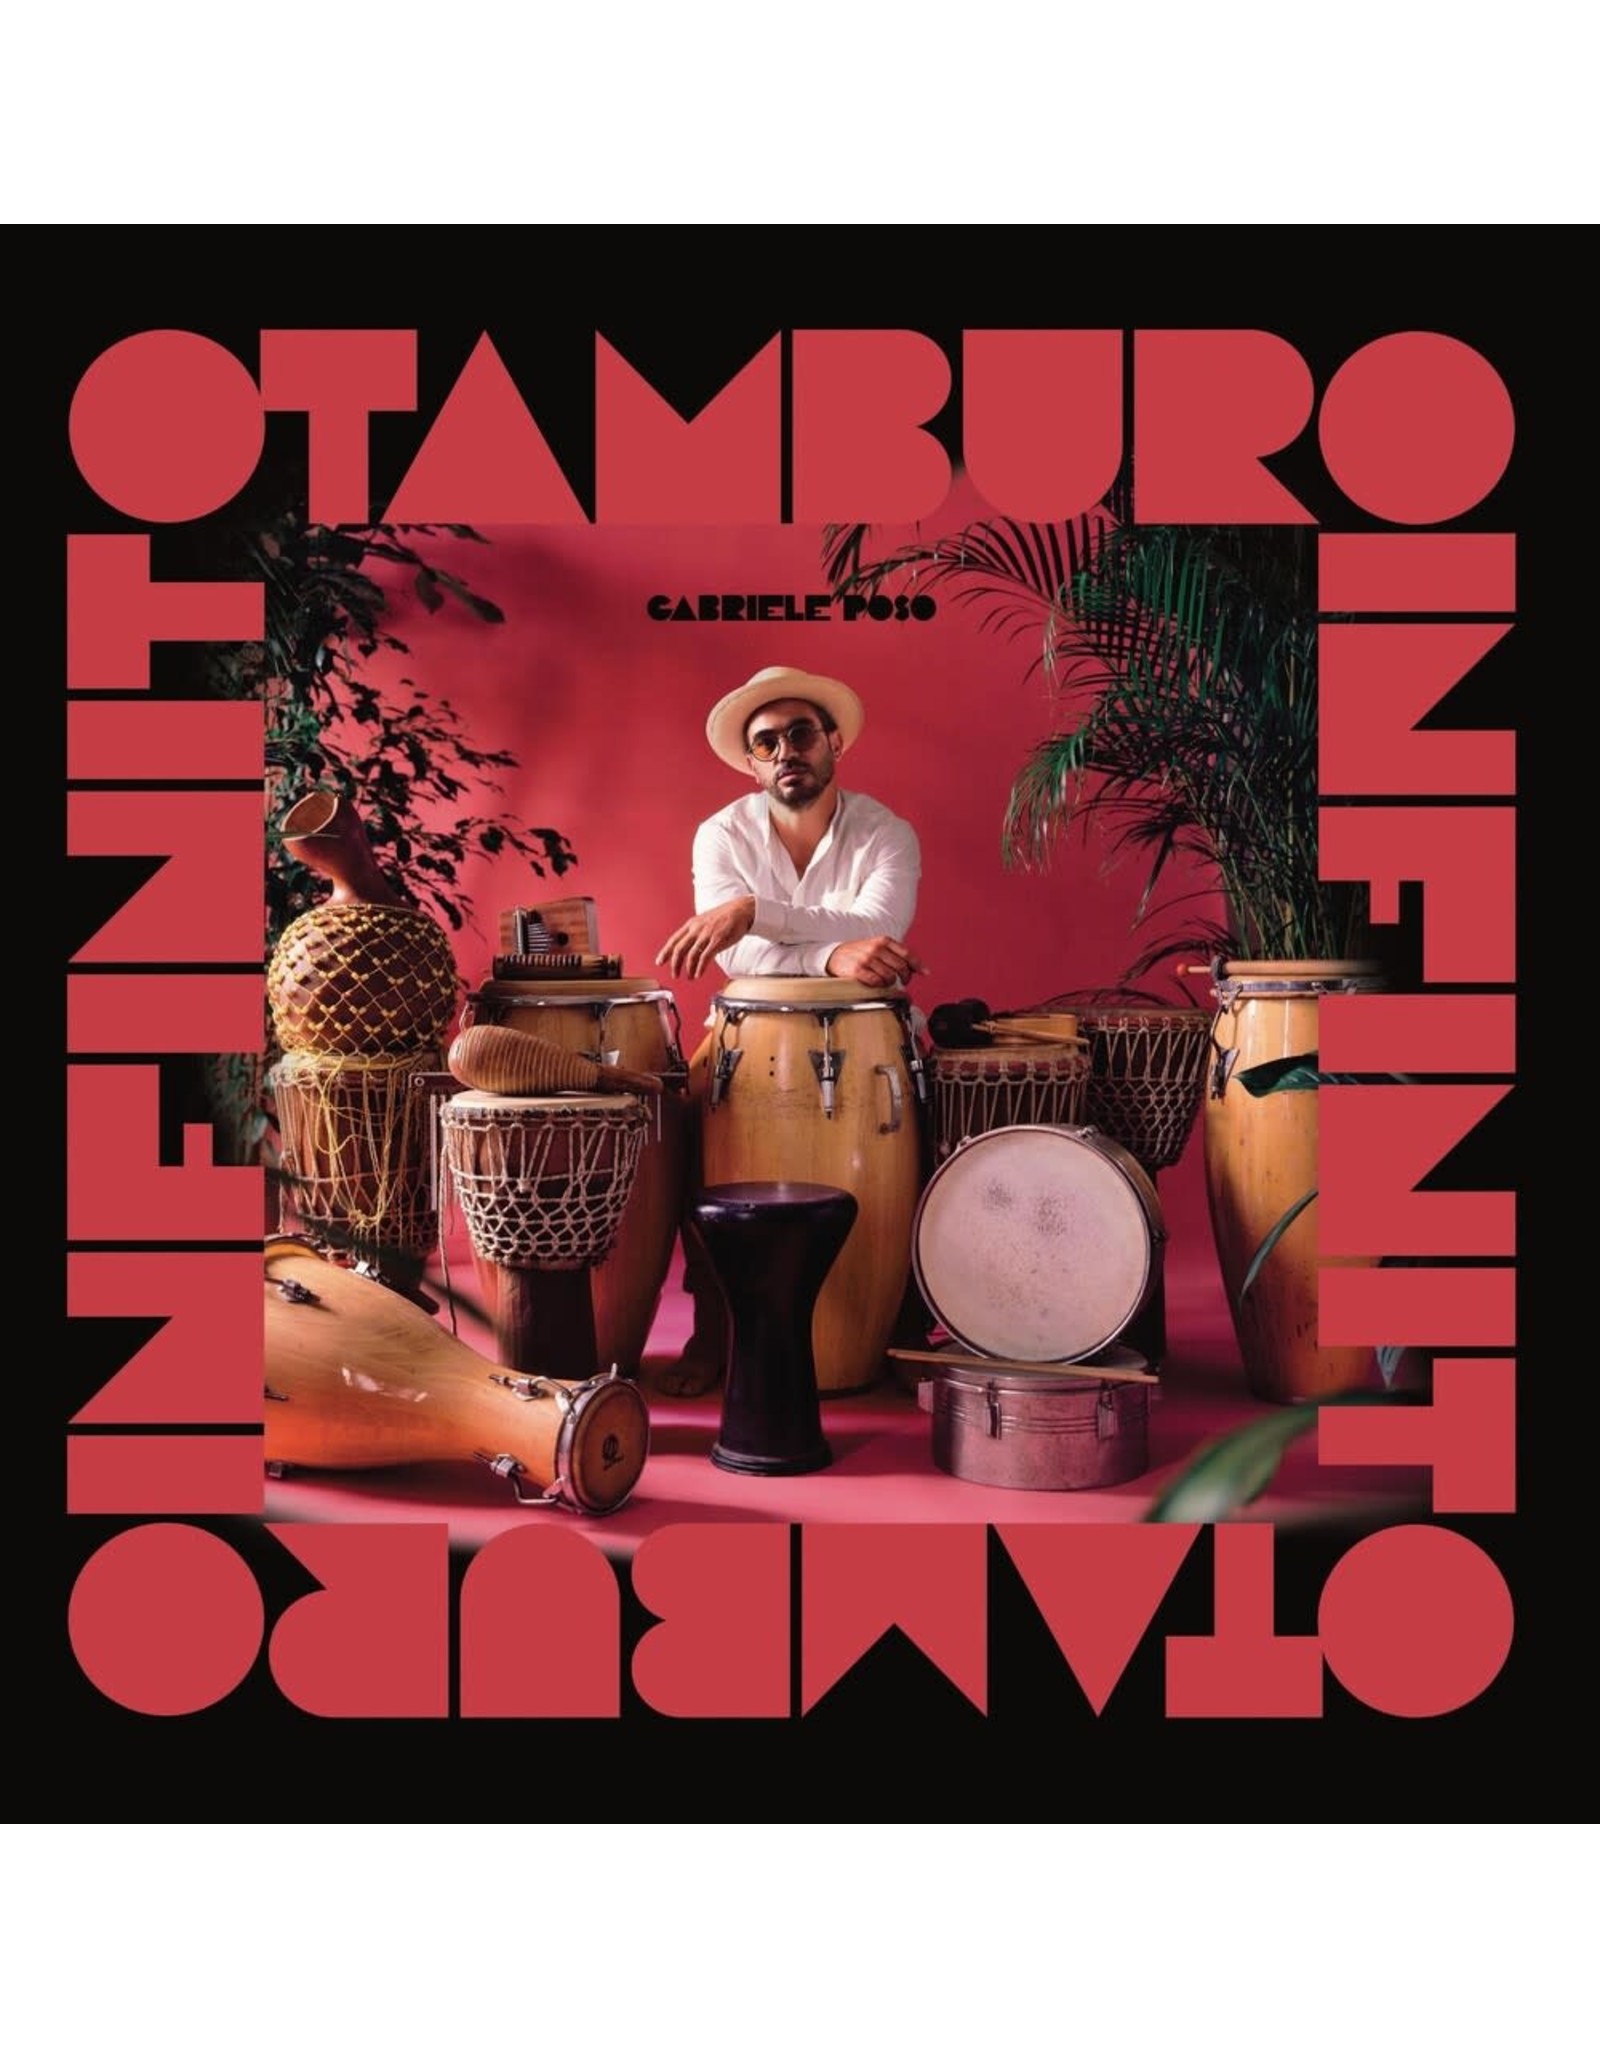 New Vinyl Gabriele Poso - Tamburo Infinito LP